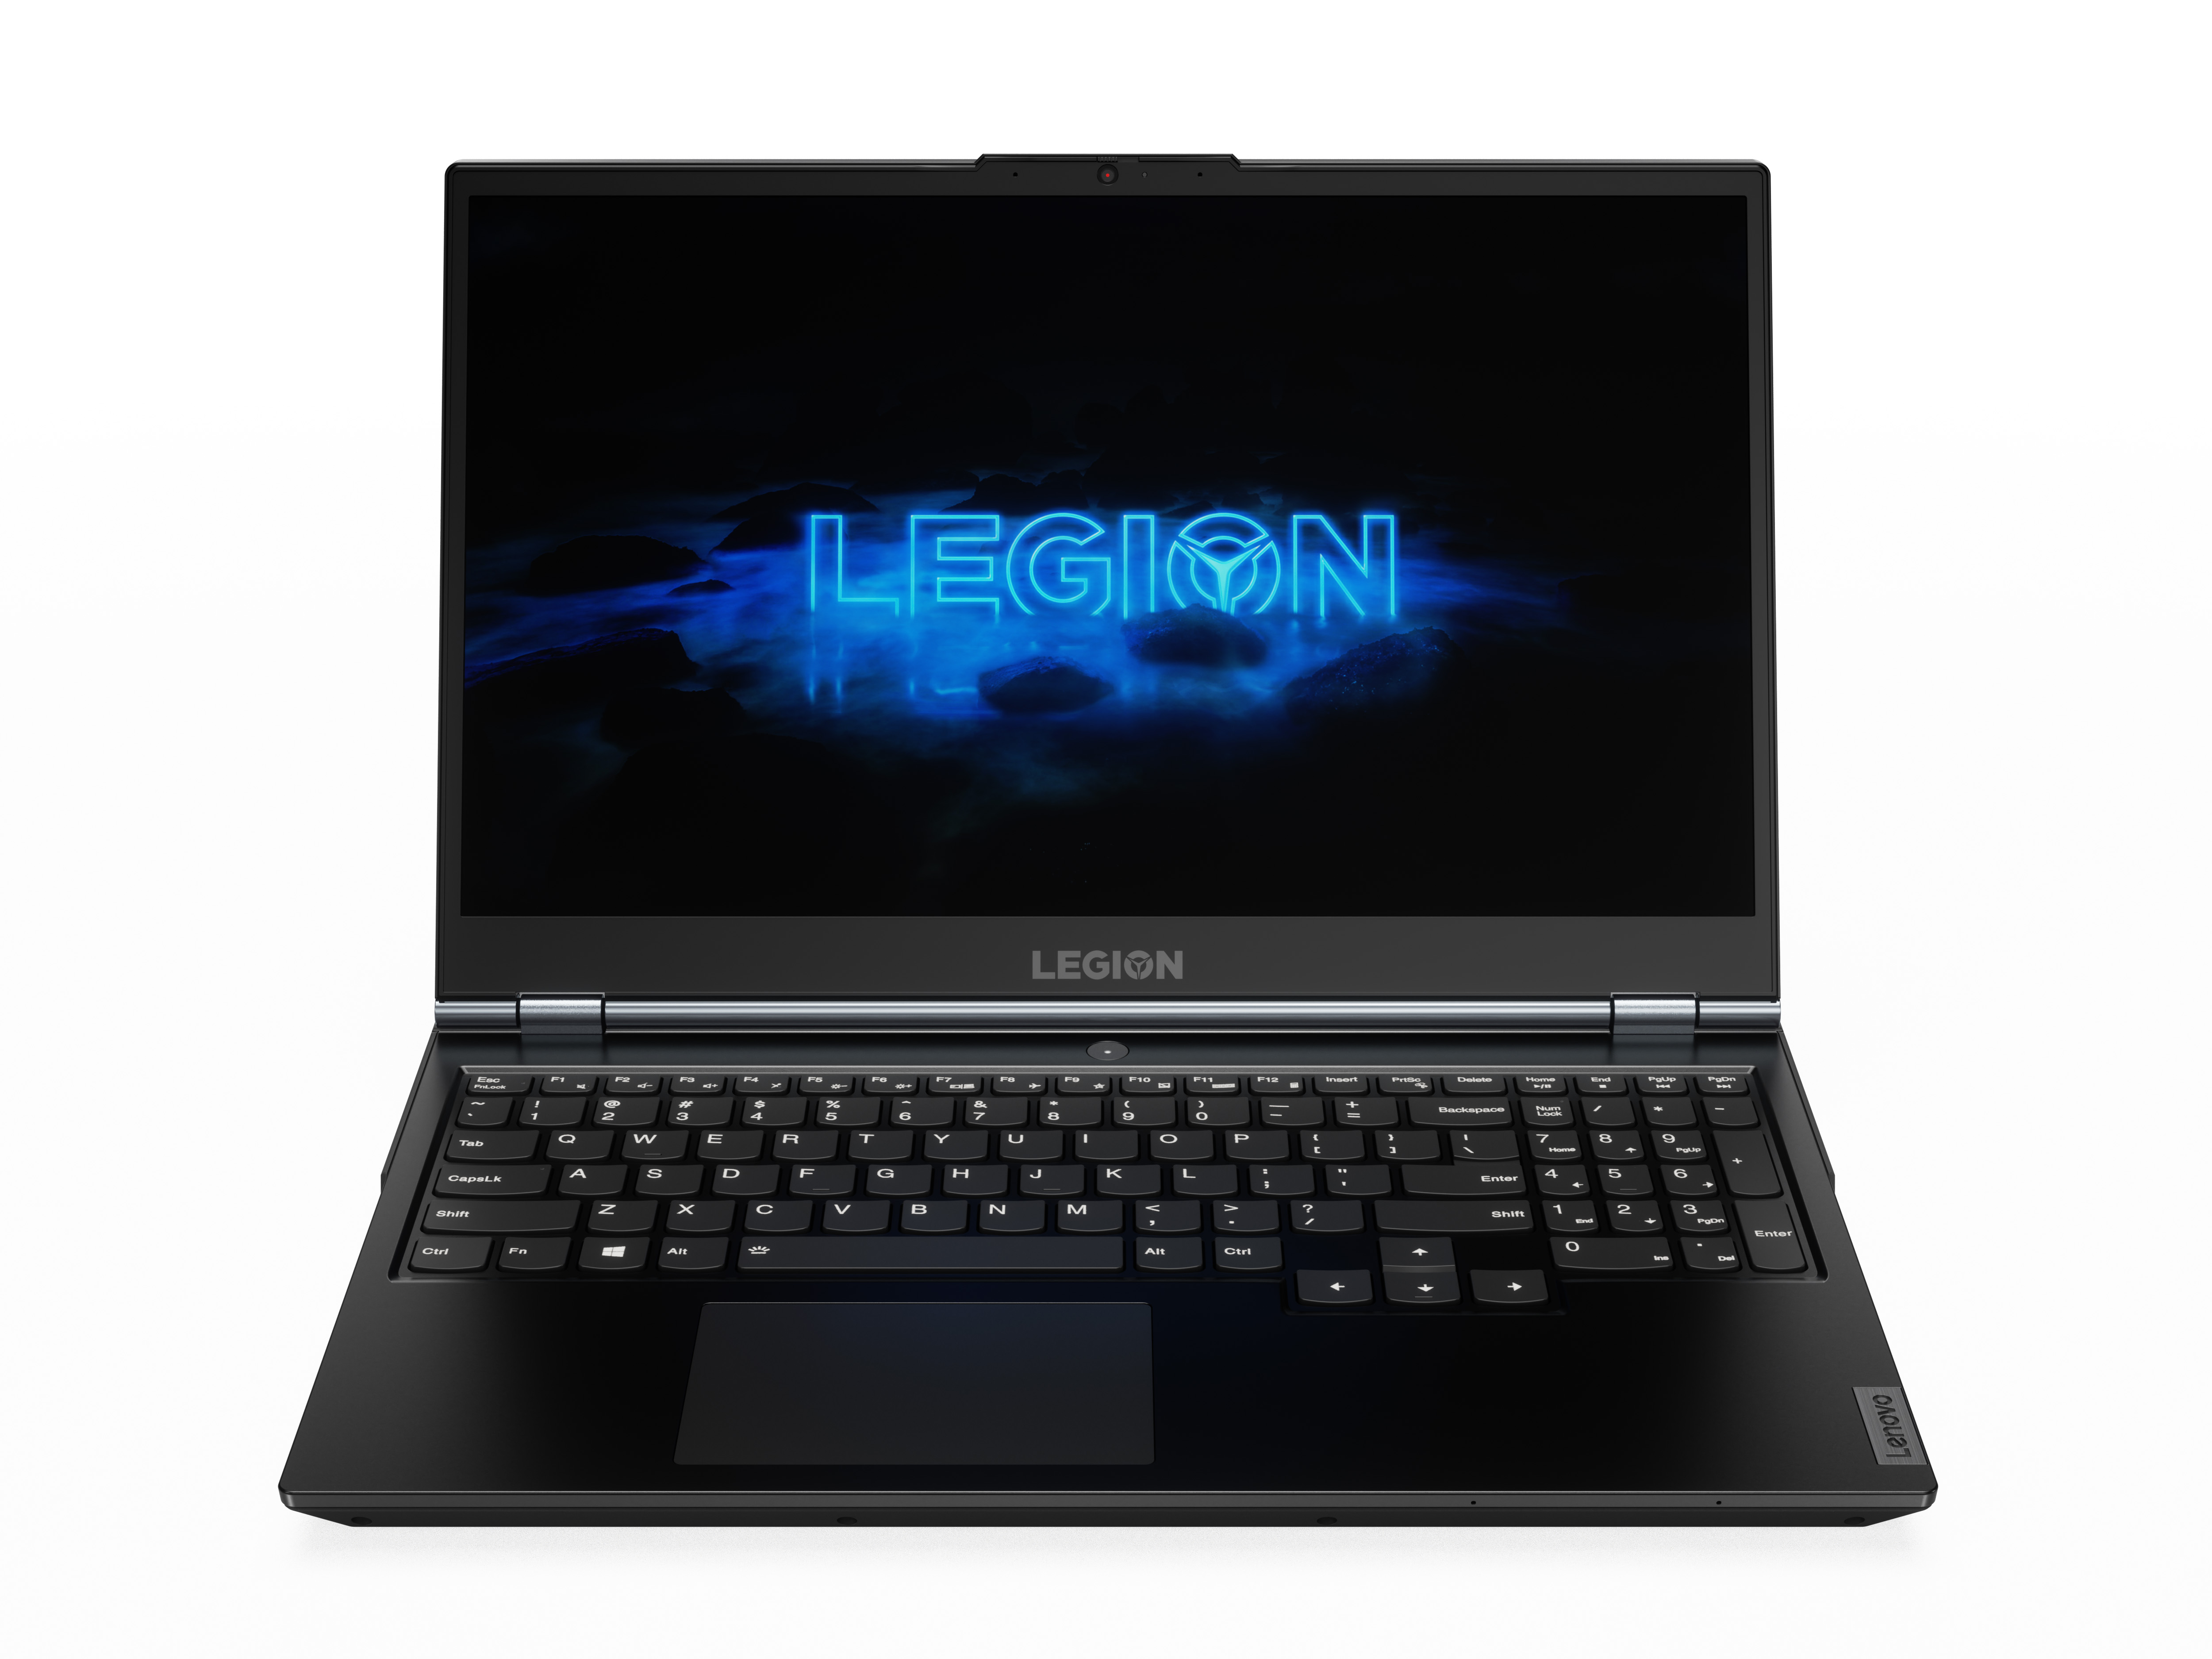 Lenovo Legion 5, 15.6" FHD, AMD Ryzen 5 4600H, NVIDIA GeForce GTX 1650Ti, 8GB, 256GB SSD + 1TB HD, Phantom Black, Windows 10 Home, 82B5001XUS - image 1 of 19